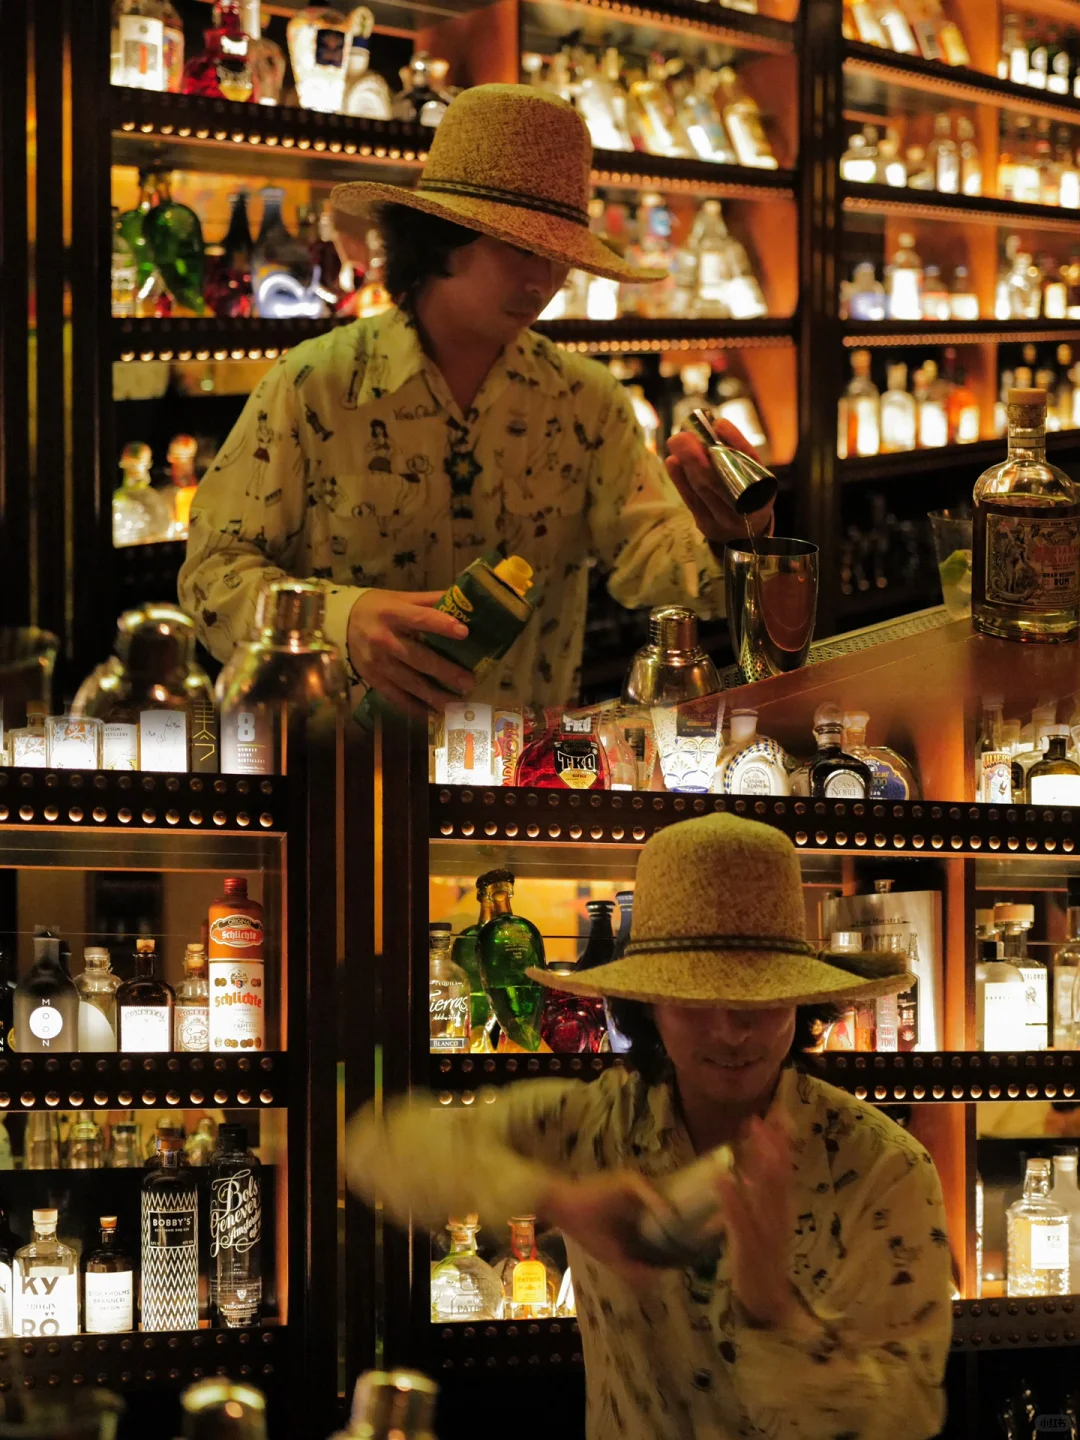 Okinawa-El Lequio🔥, a modern bar in Naha, Okinawa, serves creative cocktails